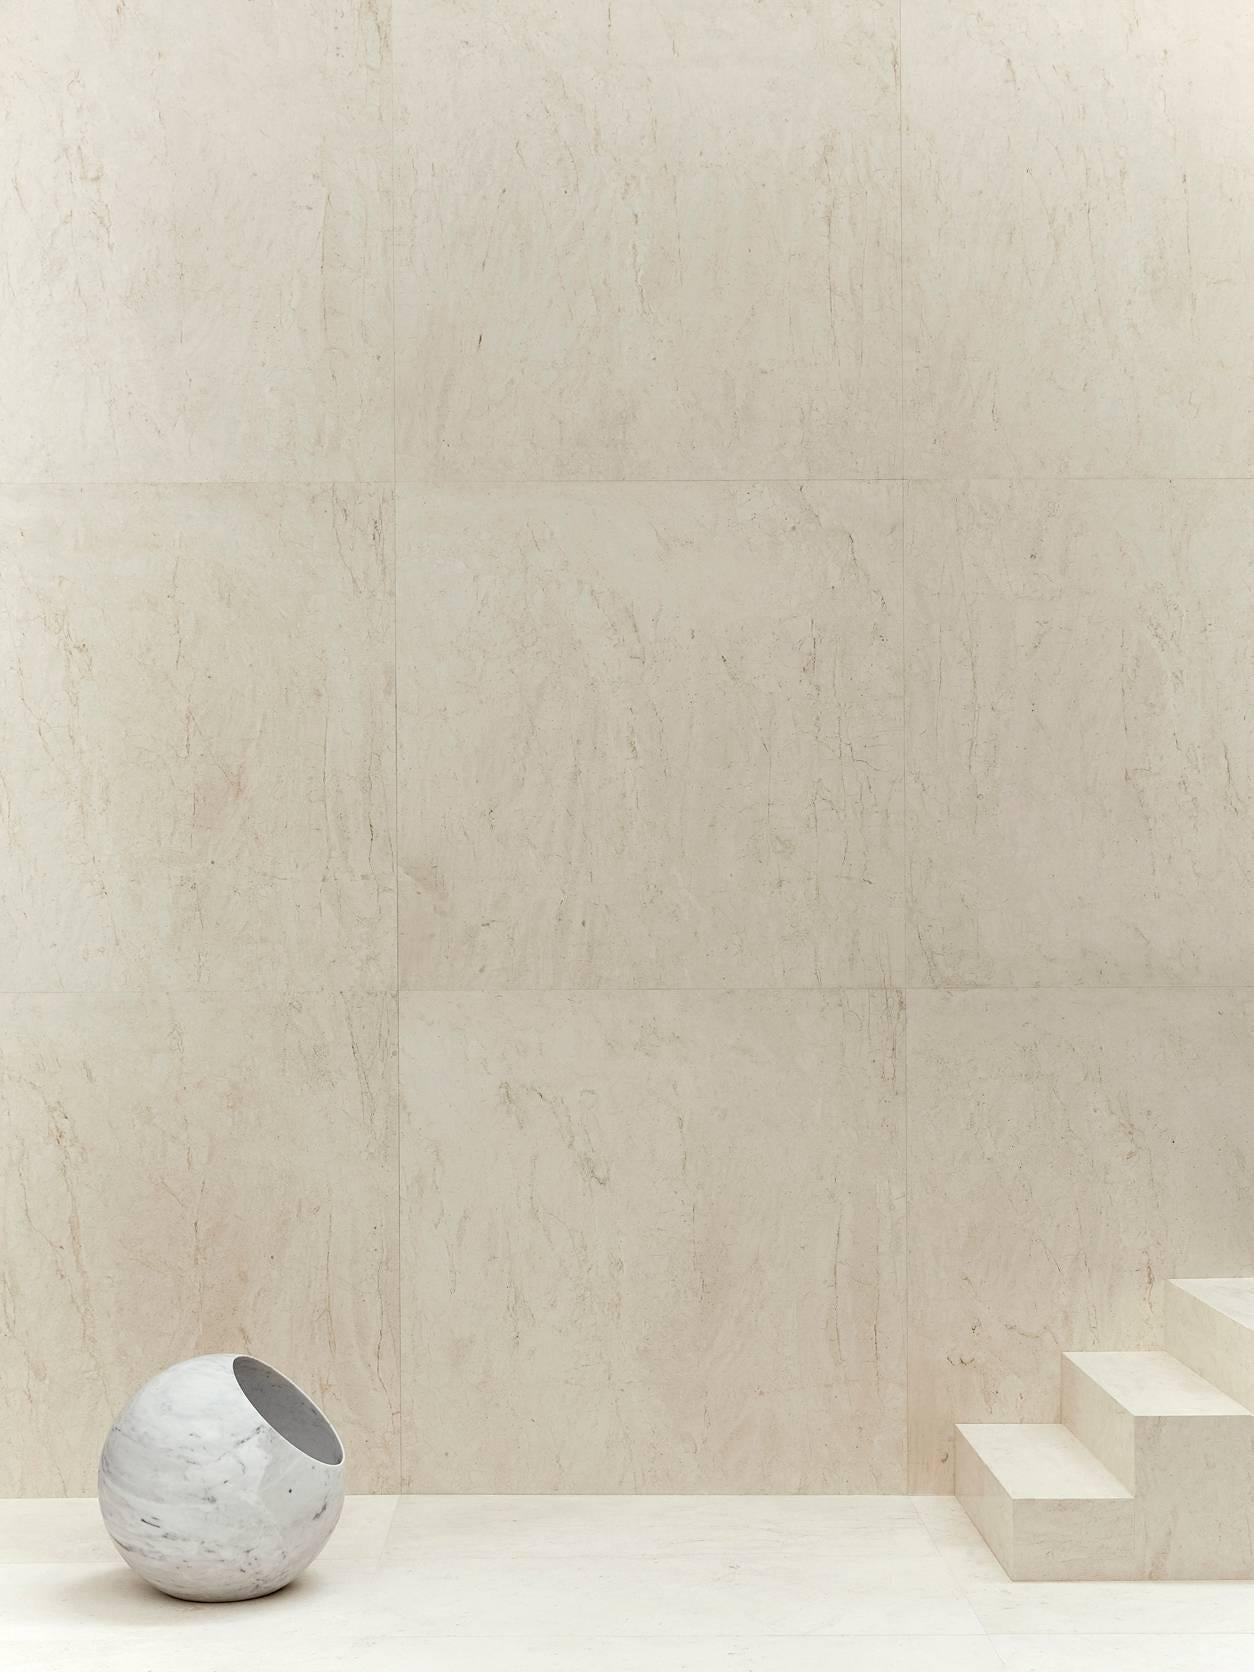 Salvatori Urano Spherical Floor Lamp 50 in Bianco Carrara Marble by Elisa Ossino For Sale 2